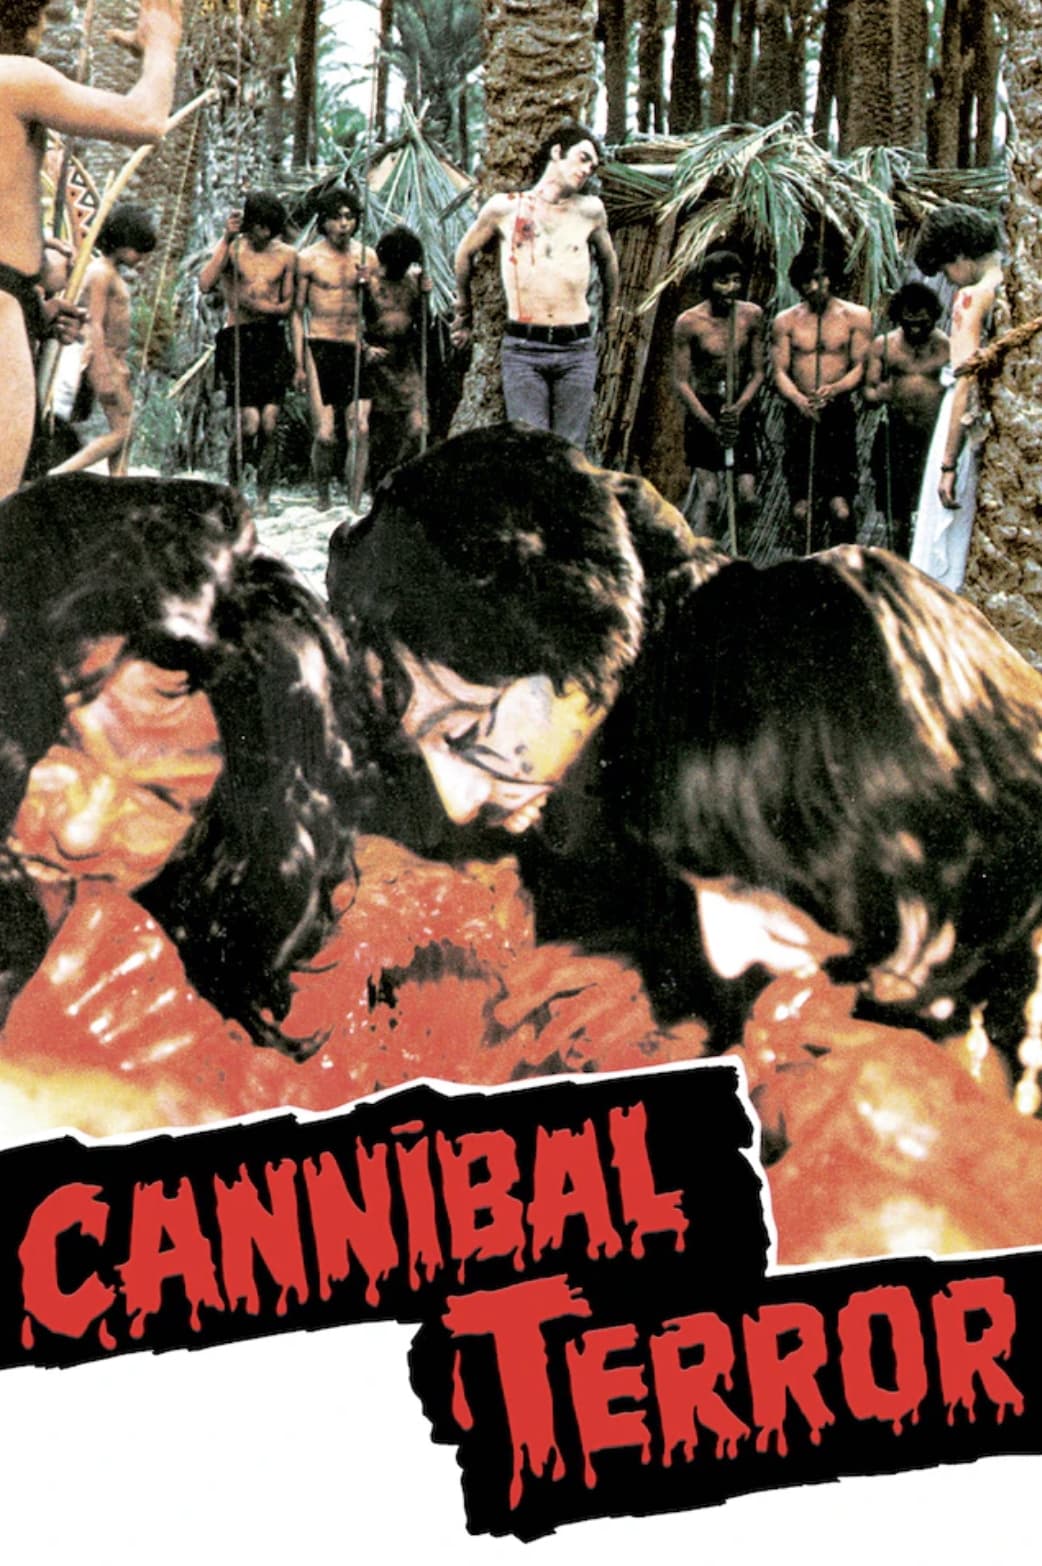 Terreur cannibale (1980)